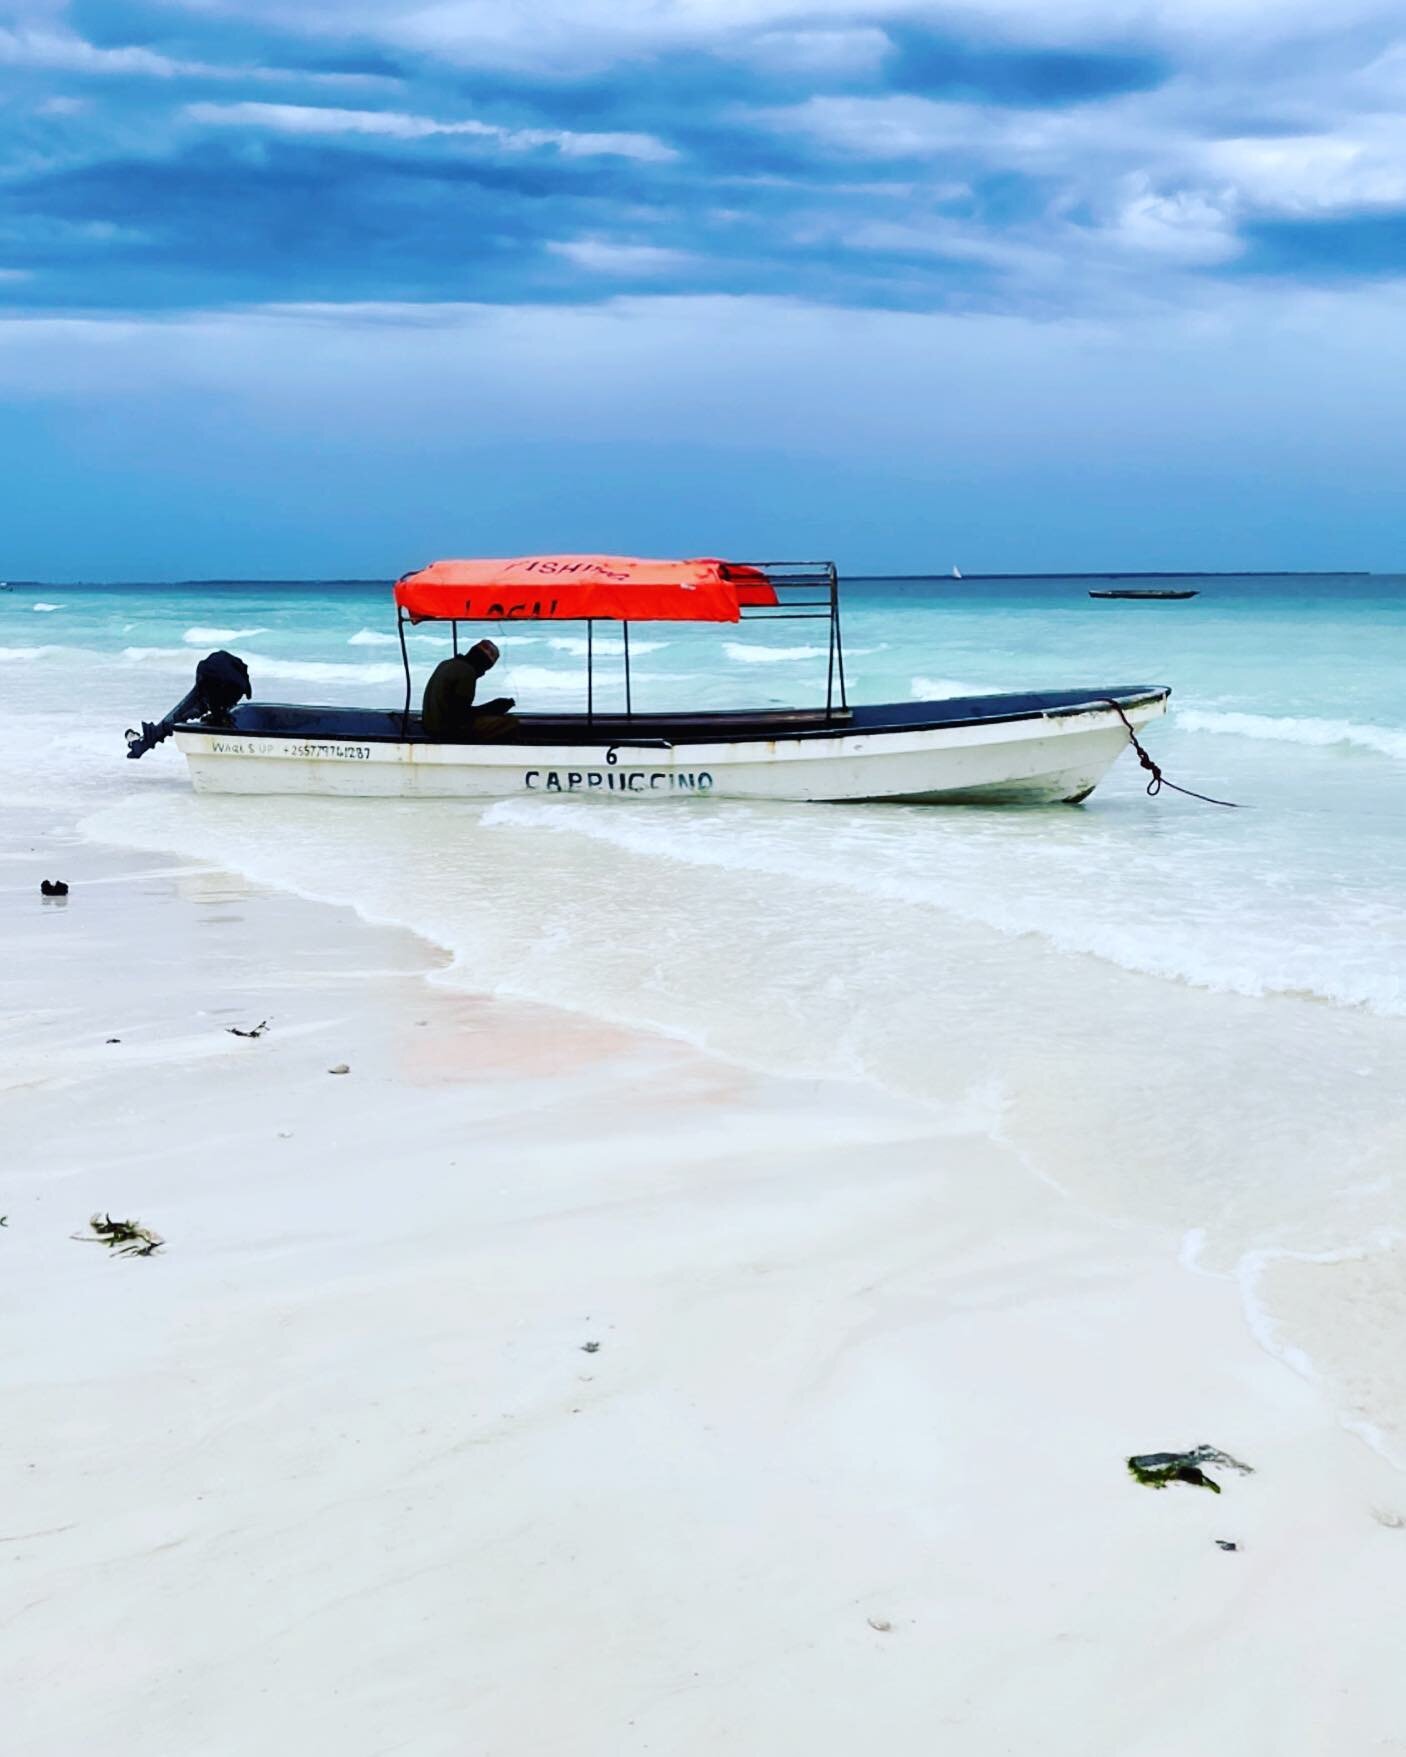 🌊 #zanzibar 
.
.
.
.
.
.
 #kendwa #sea #sun #ship #boat #shadows #tanzania  #colors #pastels #blue #travel #bluesea #ship #bluesky #africa_travel #watercolor #minimal #minimalist #monochrome #mono #vsco #vscocam #vscogood #vscodaily #vscogallery #bl